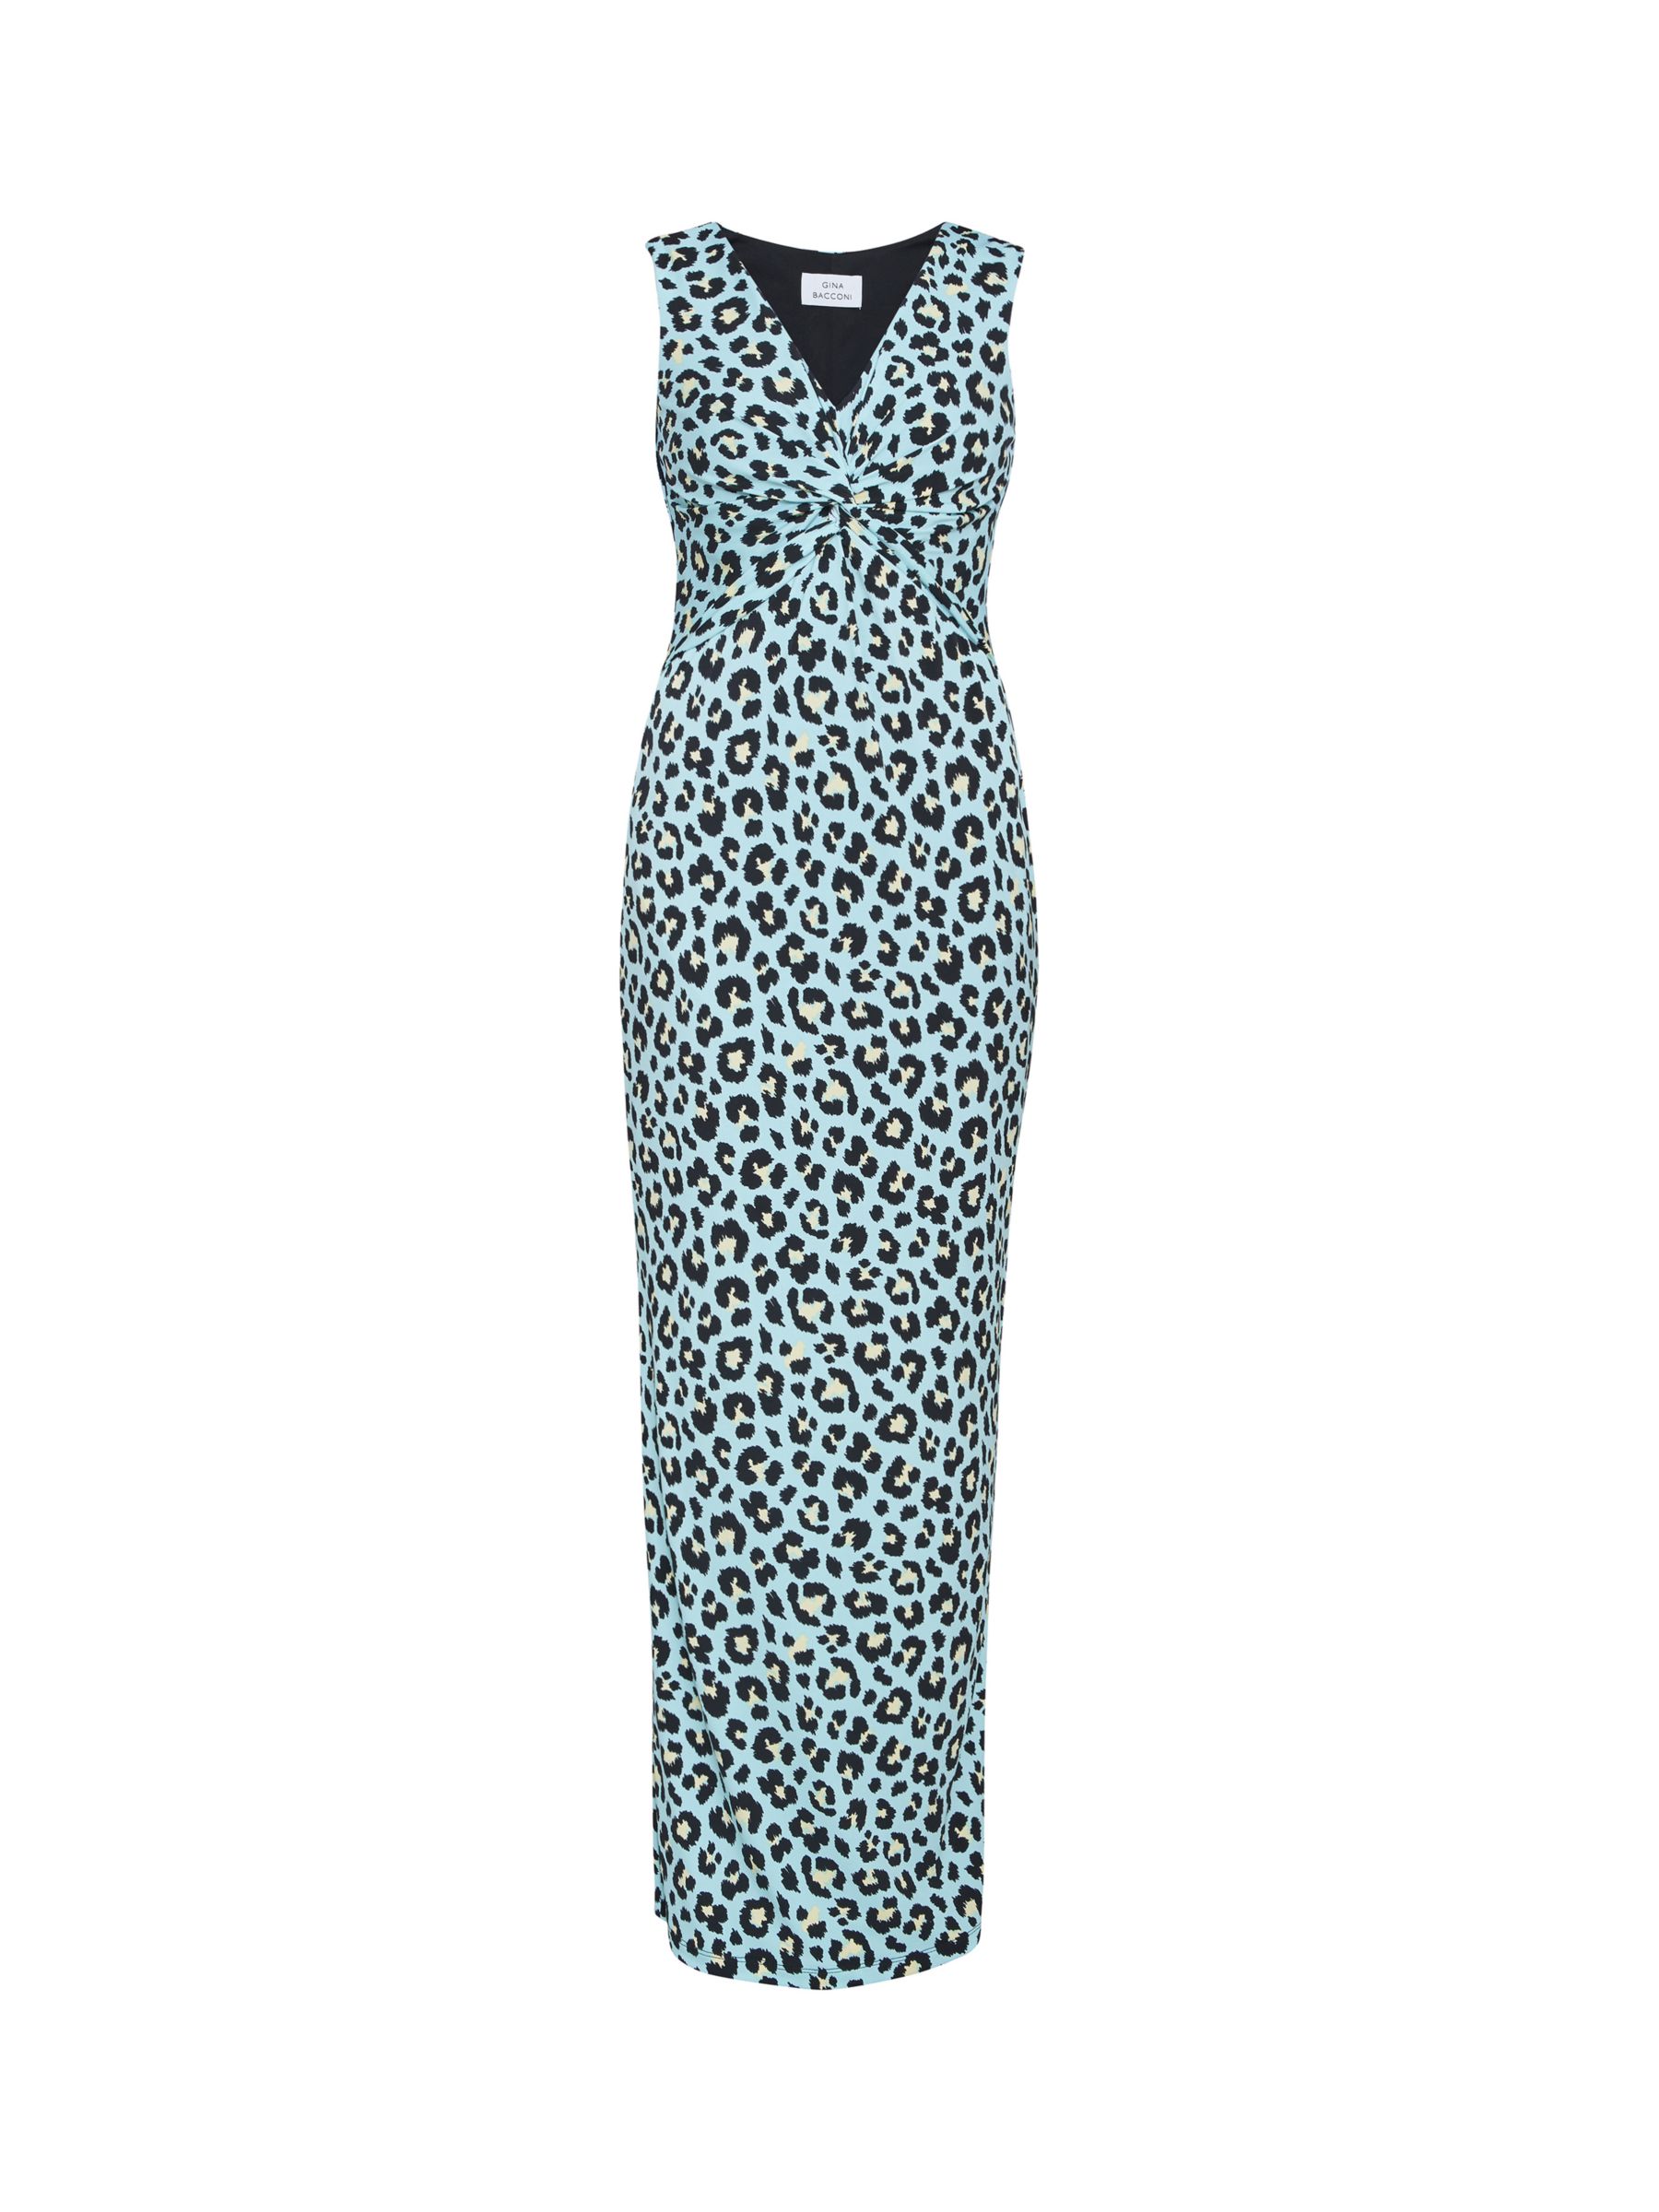 Gina Bacconi Hudson Leopard Print Maxi Dress, Turquoise, 8